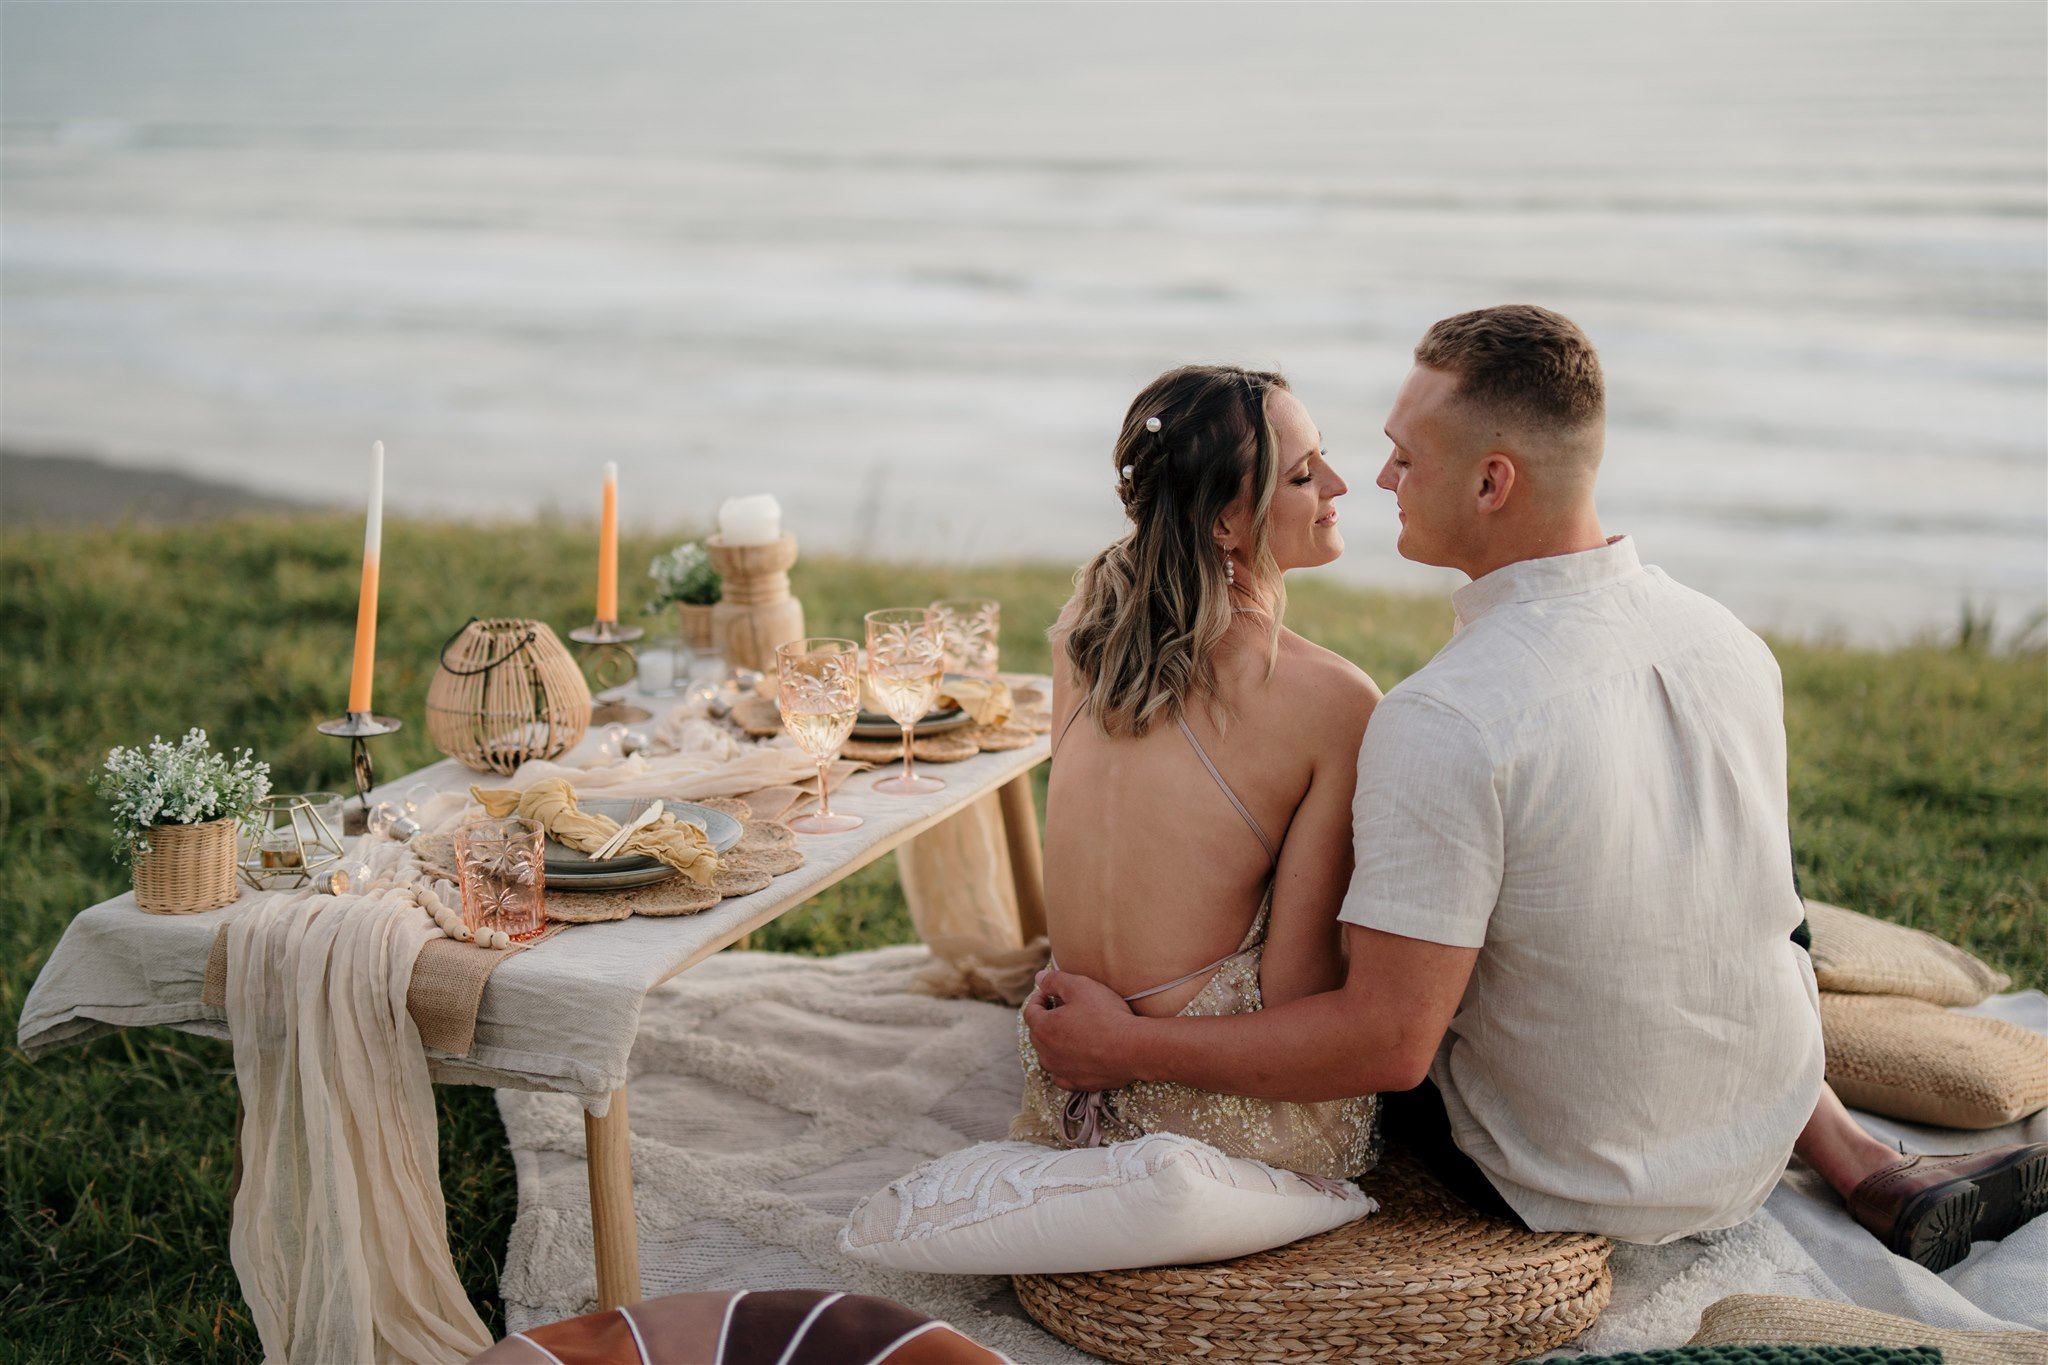 luxury-picnics-decoration-castaways-NZ-new-zealand-auckland-wedding-photographer-photography-videography-film-dear-white-productions-best-venue-waiuku-engagement-elopement-style-beach-intimate  (21).jpg